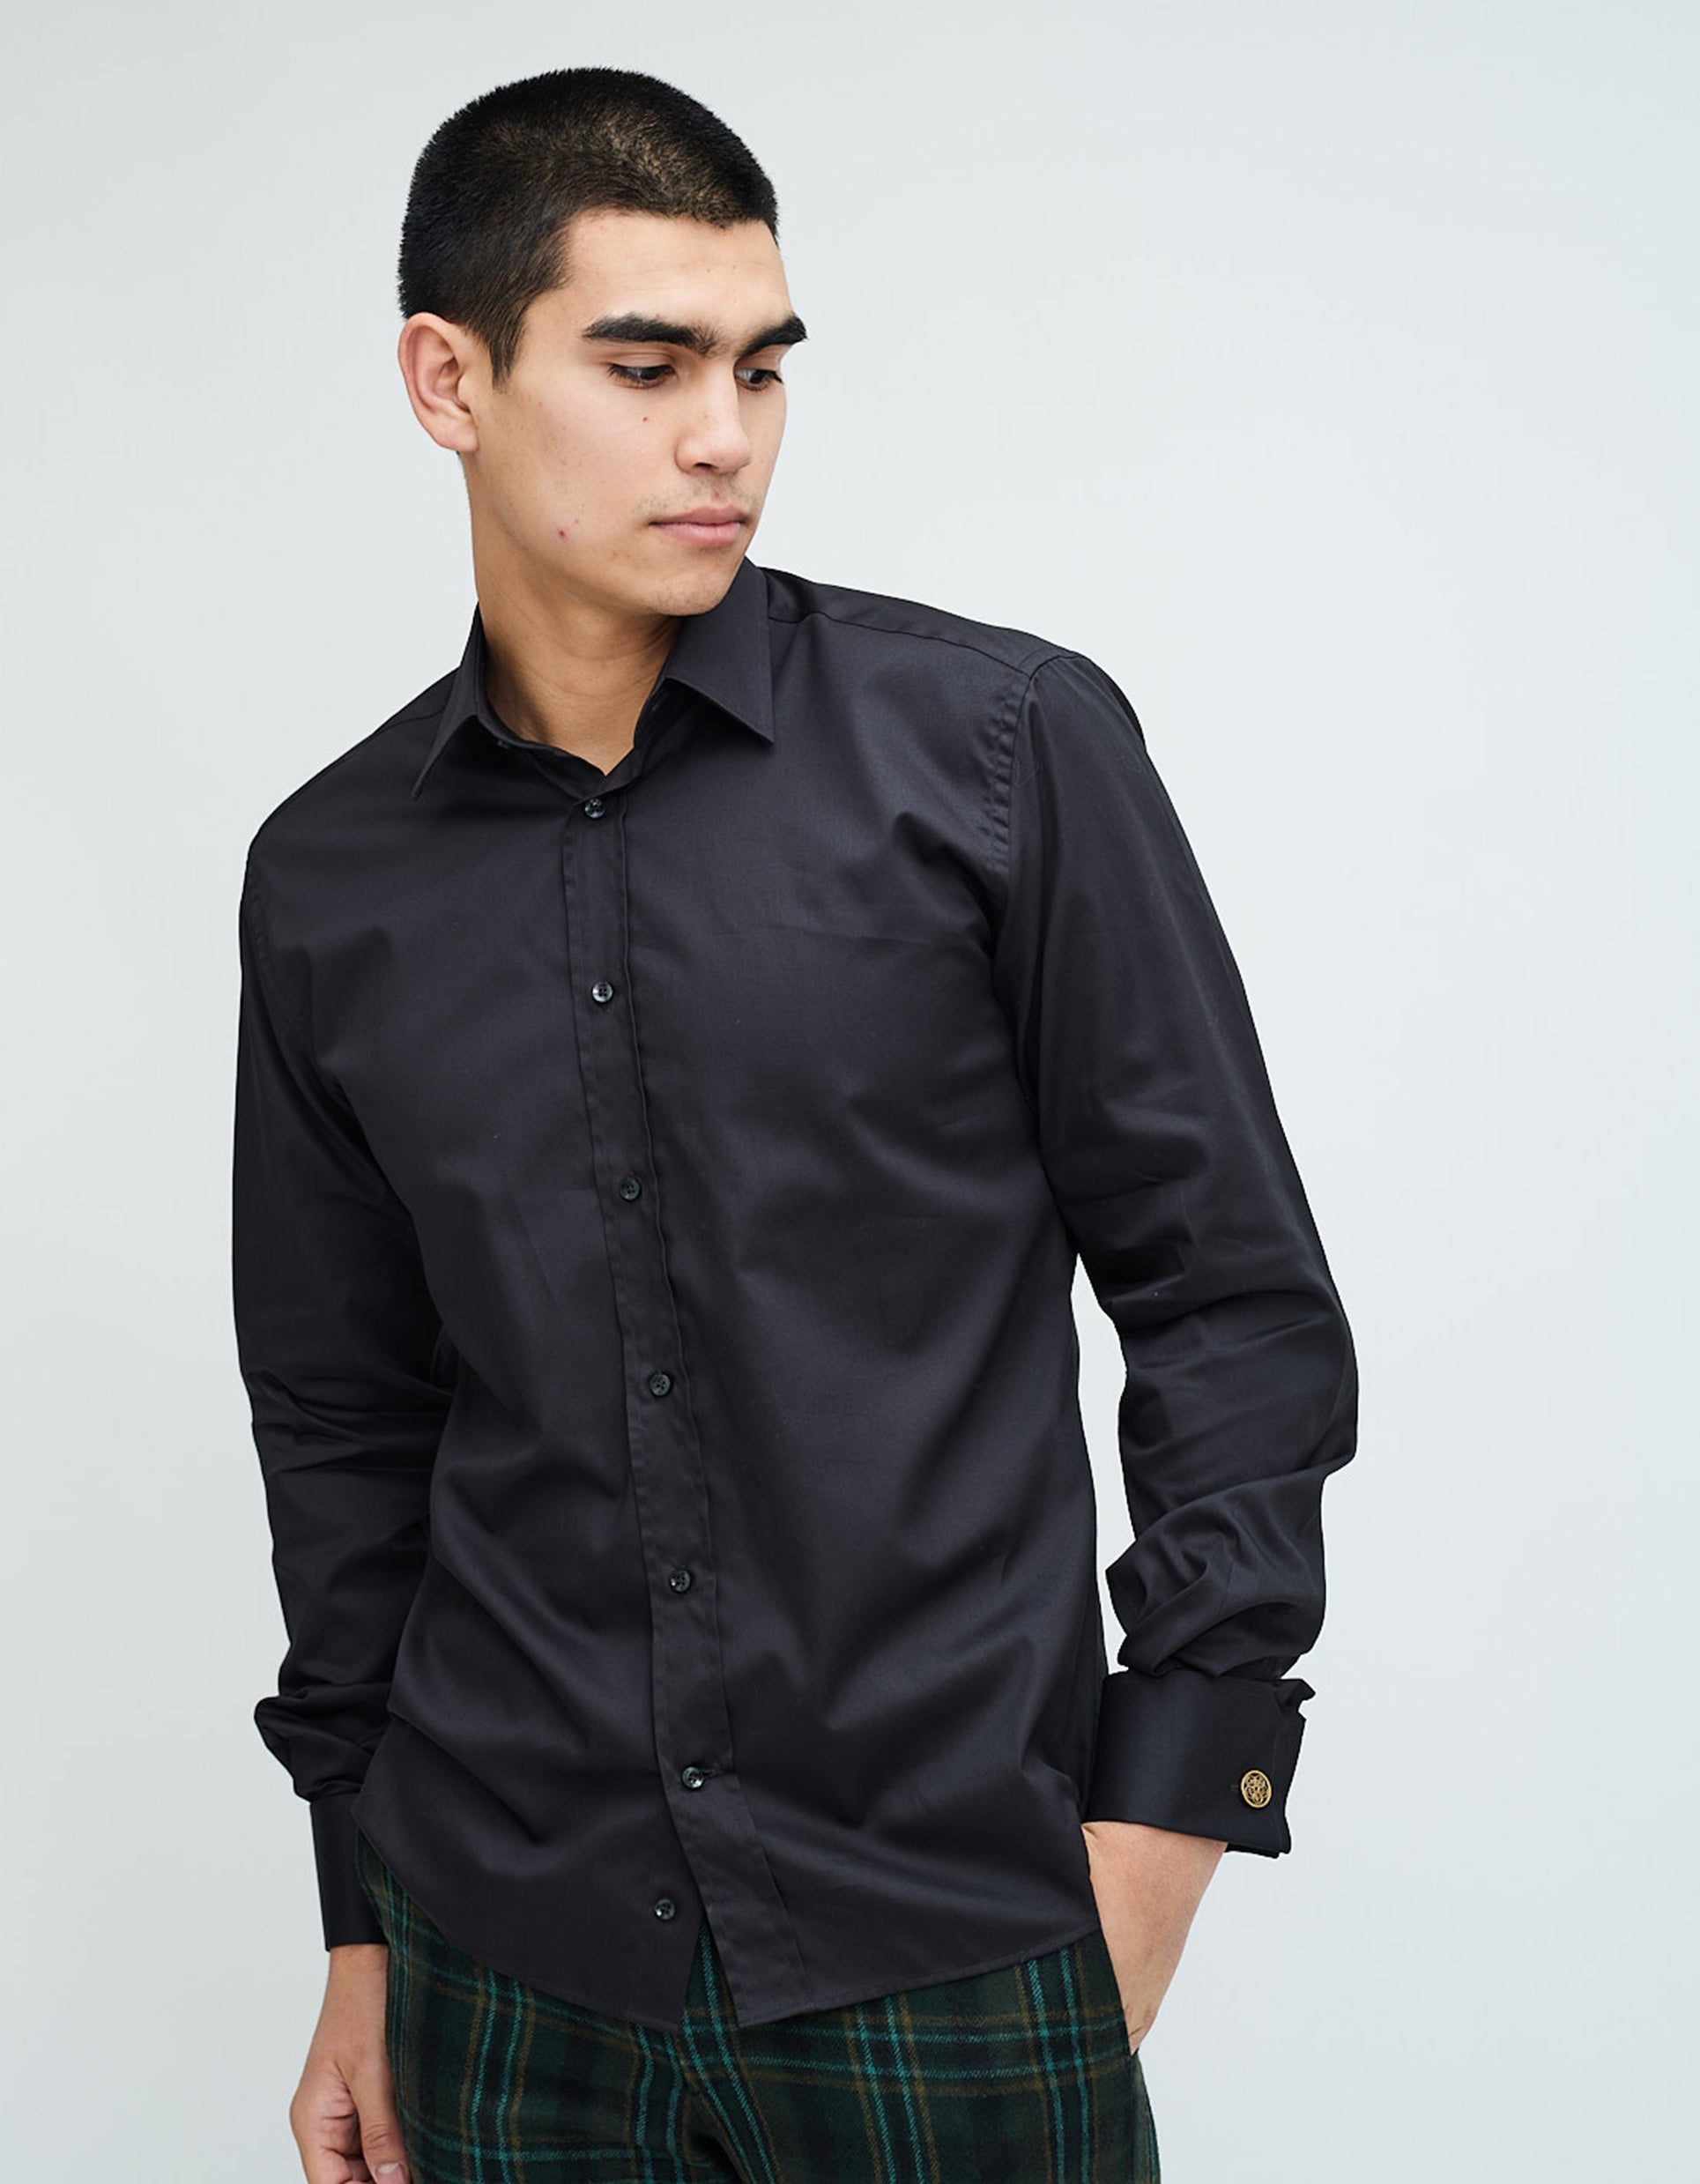 black colour shirt design